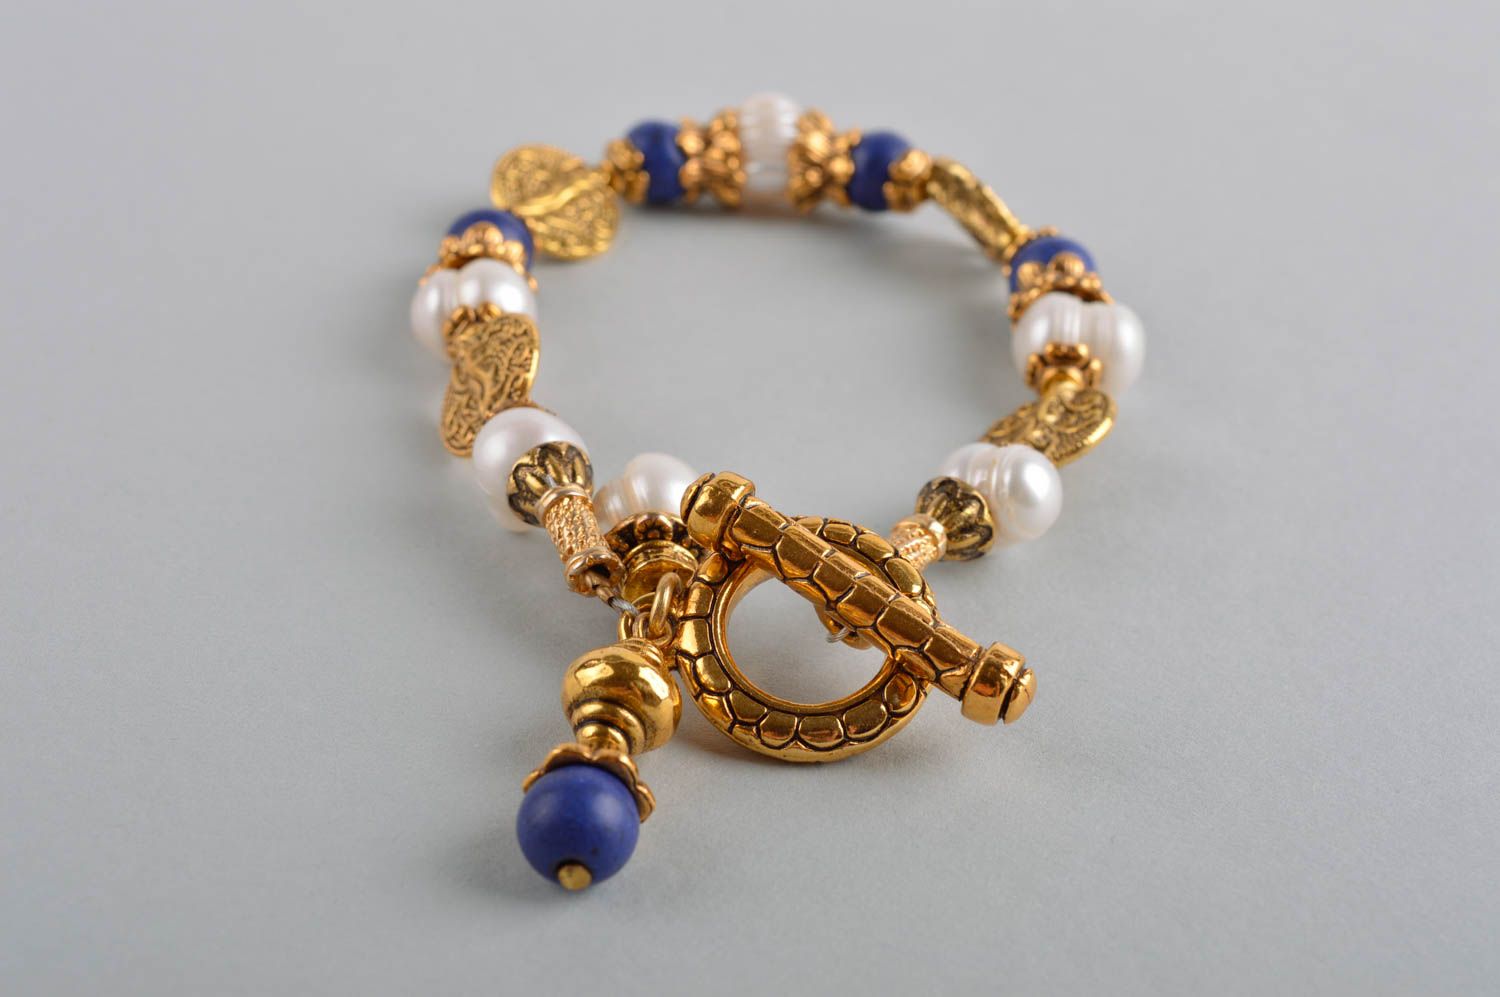 Homemade white and blue beads charm bracelet gemstone jewelry for women photo 4